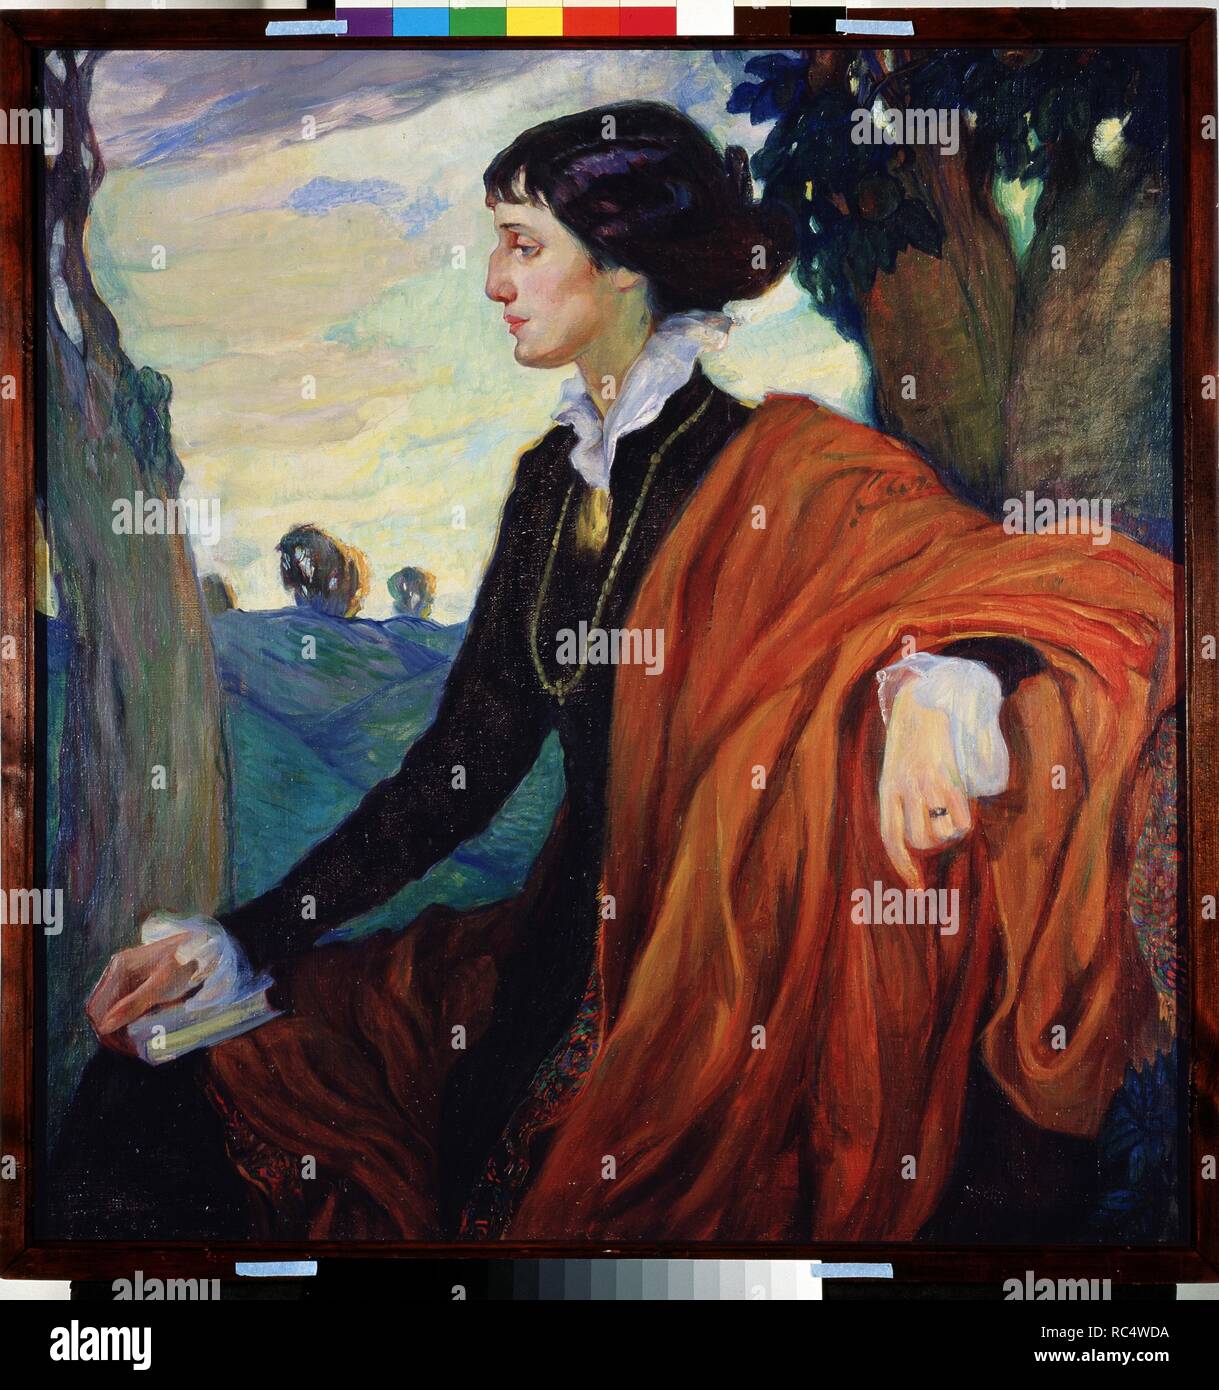 Portrait of the Poetess Anna Akhmatova (1889-1966). Museum: State Tretyakov Gallery, Moscow. Author: Della-Vos-Kardovskaya, Olga Ludvigovna. Stock Photo